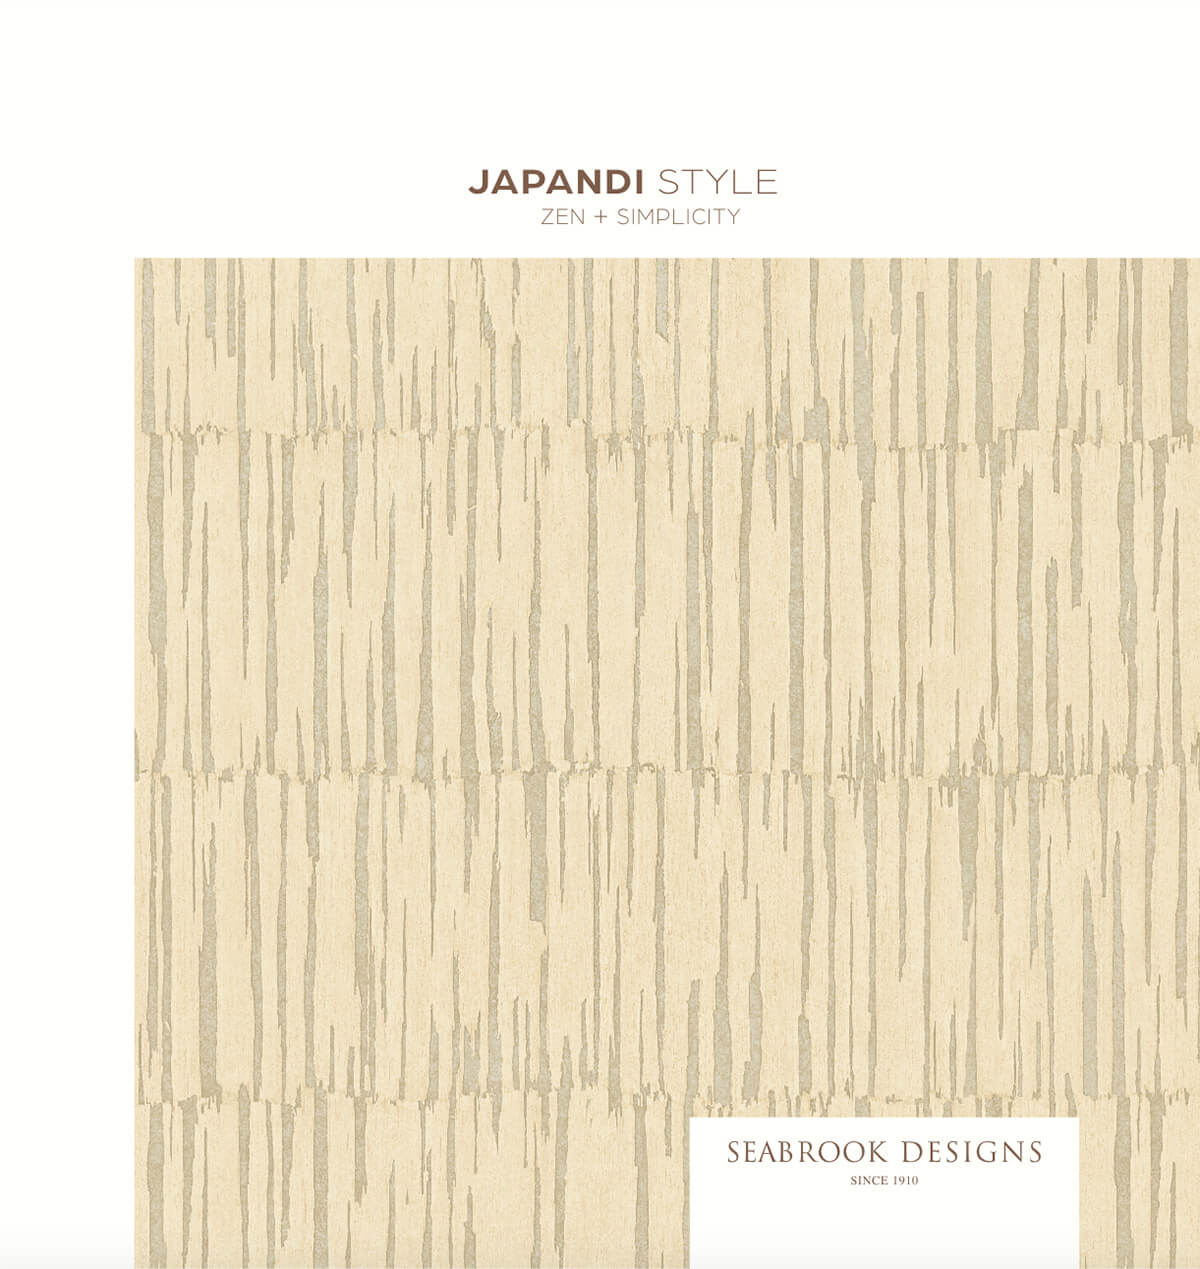 Seabrook Designs Japandi Style Nara Wallpaper - Linen